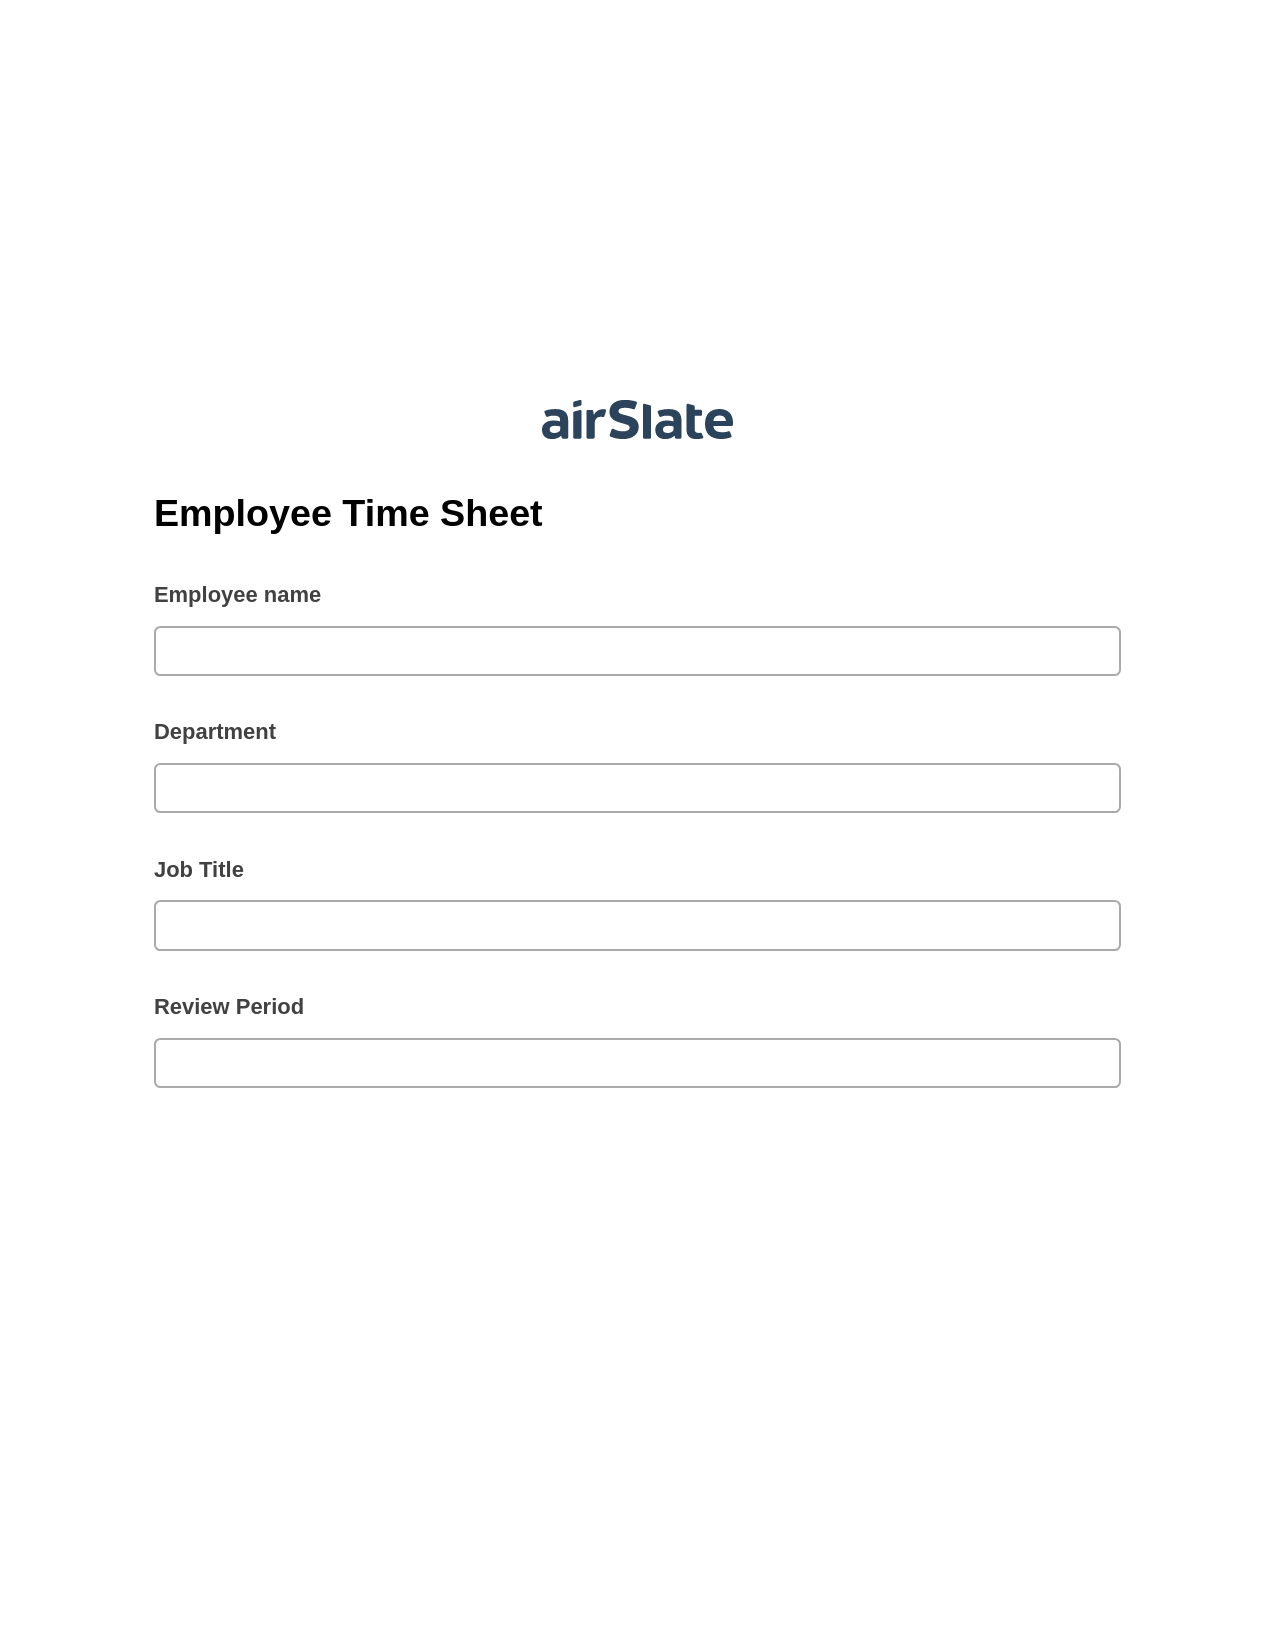 Multirole Employee Time Sheet Pre-fill from CSV File Bot, Create Salesforce Records Bot, Export to Google Sheet Bot